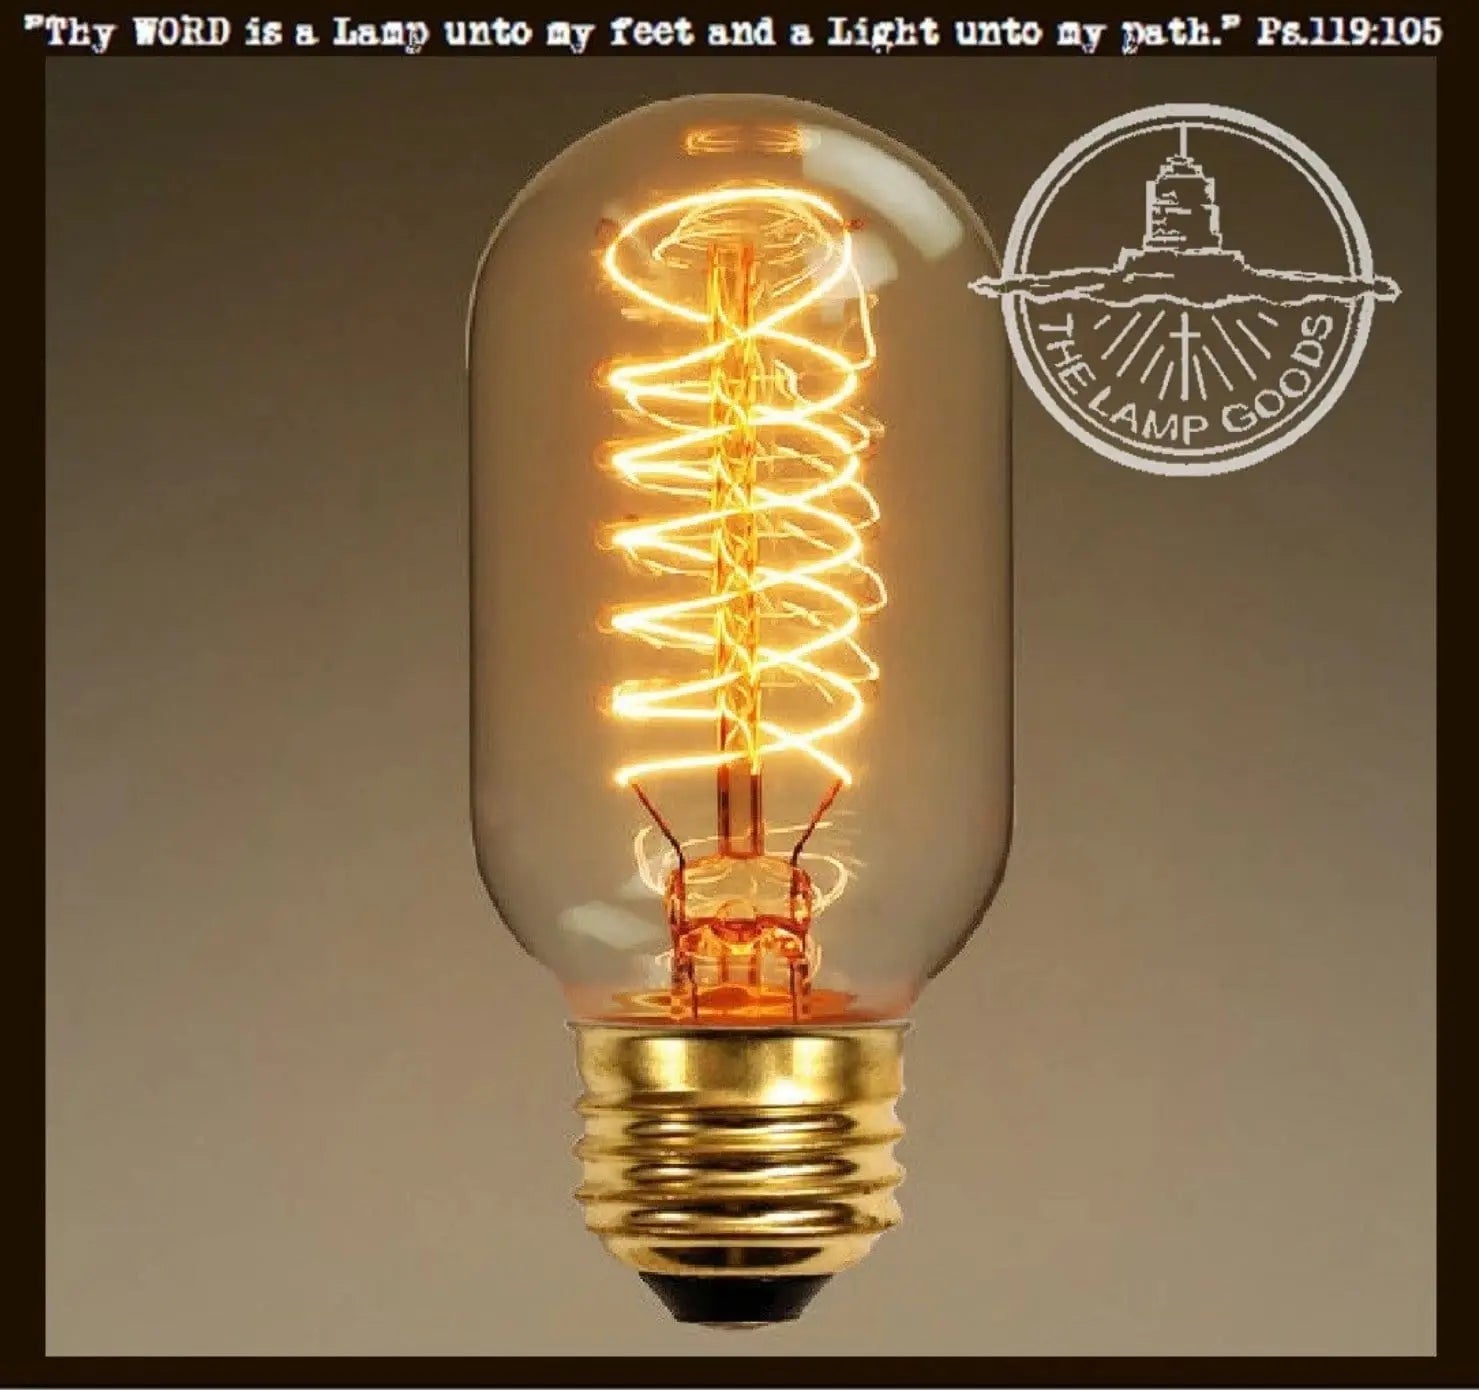 Edison Style Light Bulb for Mason Jar Lighting - 40 watts - The Lamp Goods